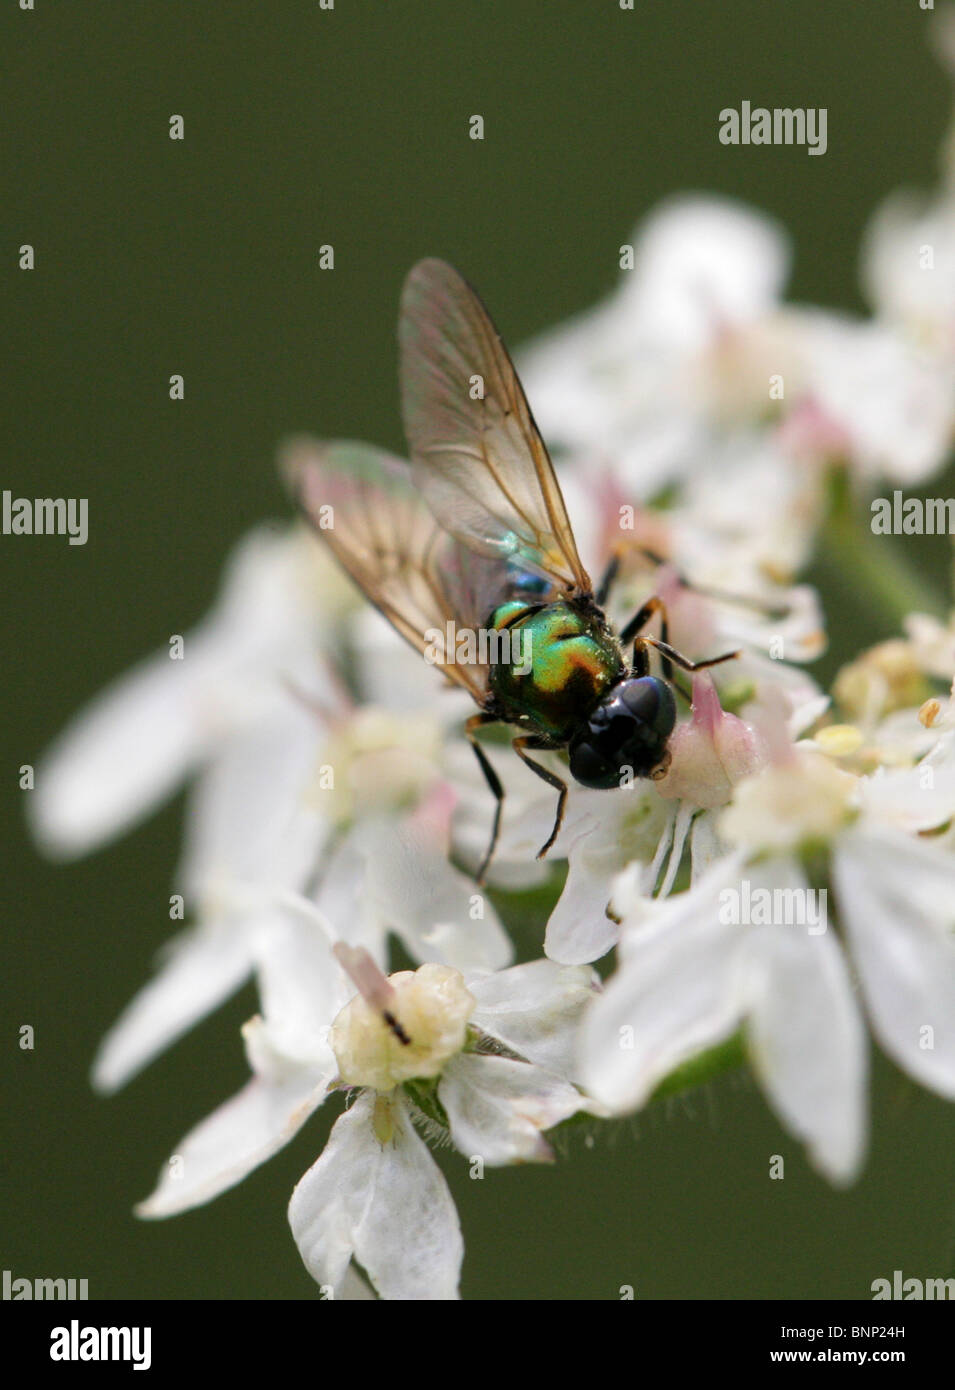 Green Soldier Fly, Chloromyia formosa, Stratiomyidae, Diptera. Aka Broad Centurion or Broad Centurion Soldier Fly. Female. Stock Photo